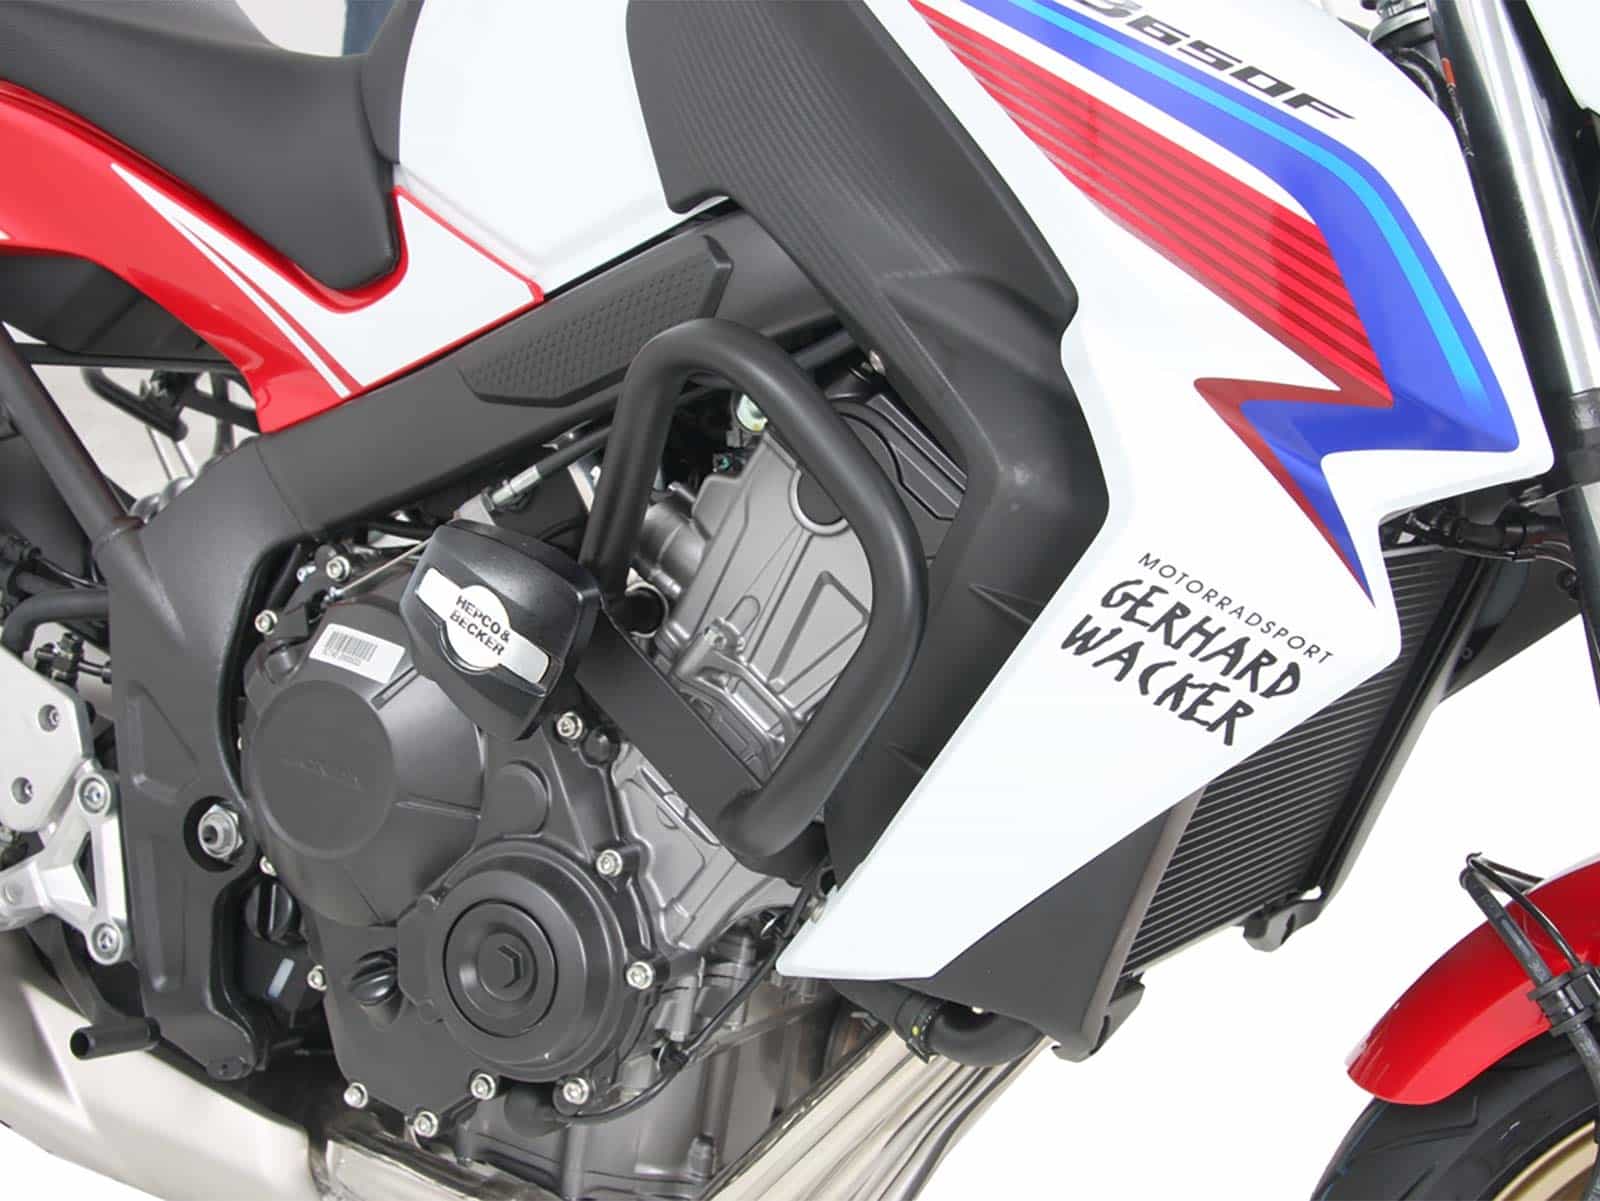 Hepco & Becker Moteur Étrier De Protection Pare-carter 501979 00 02 pour Honda CB 1100 13 